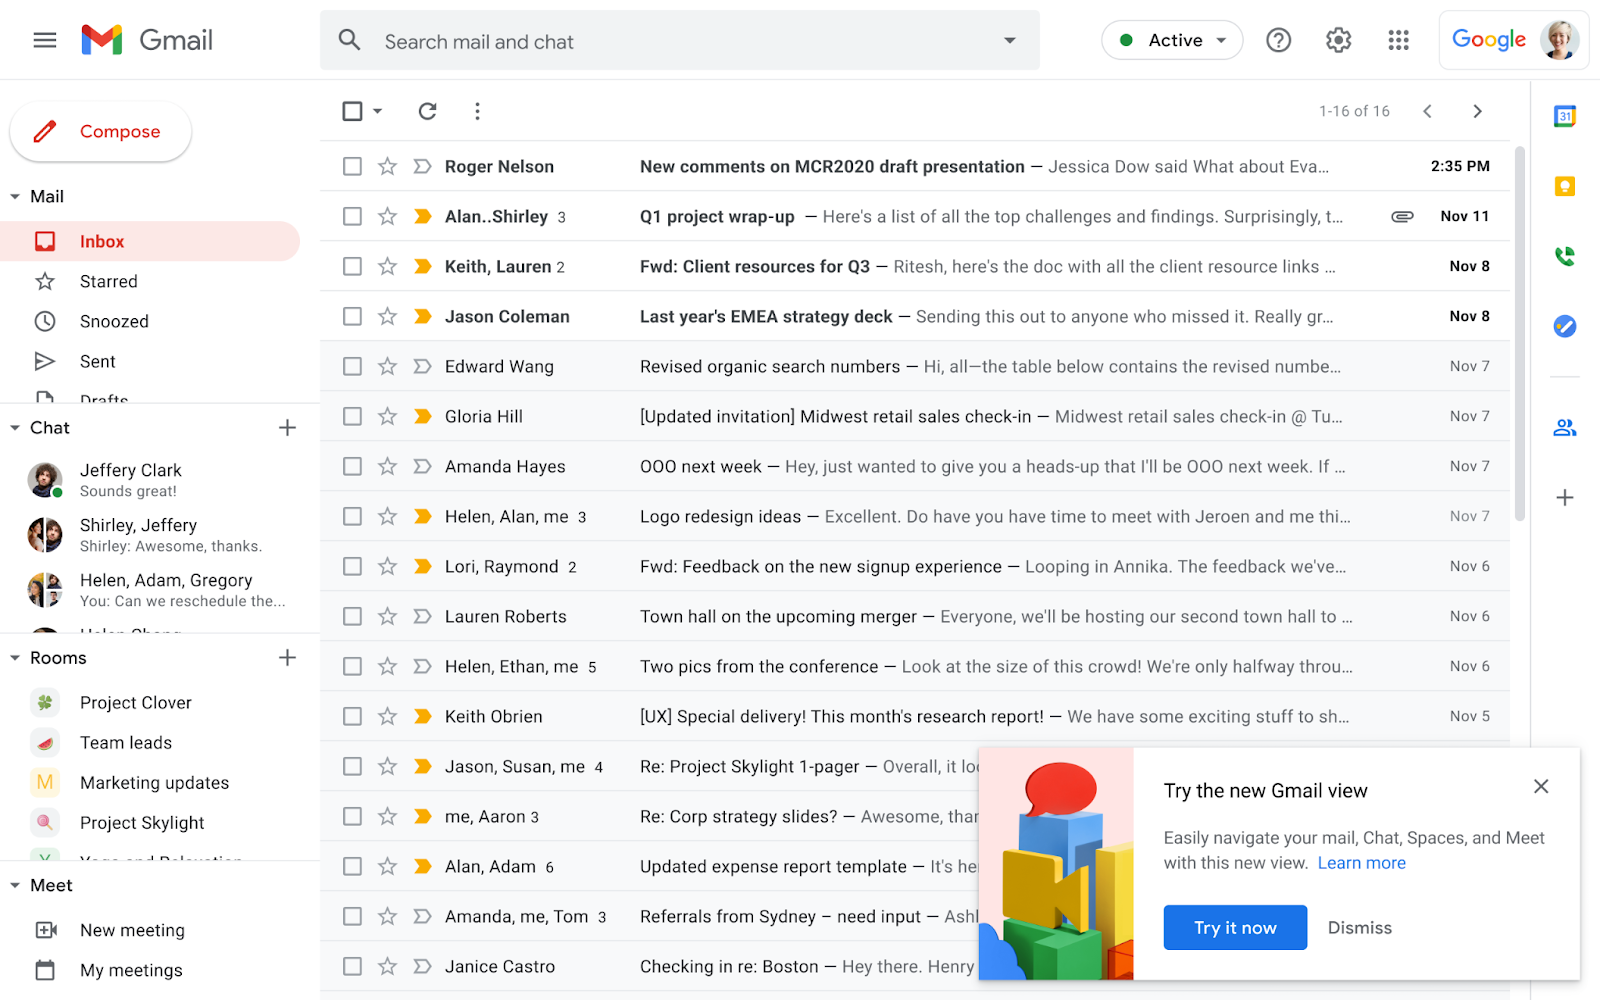 Google unveils new Gmail web interface